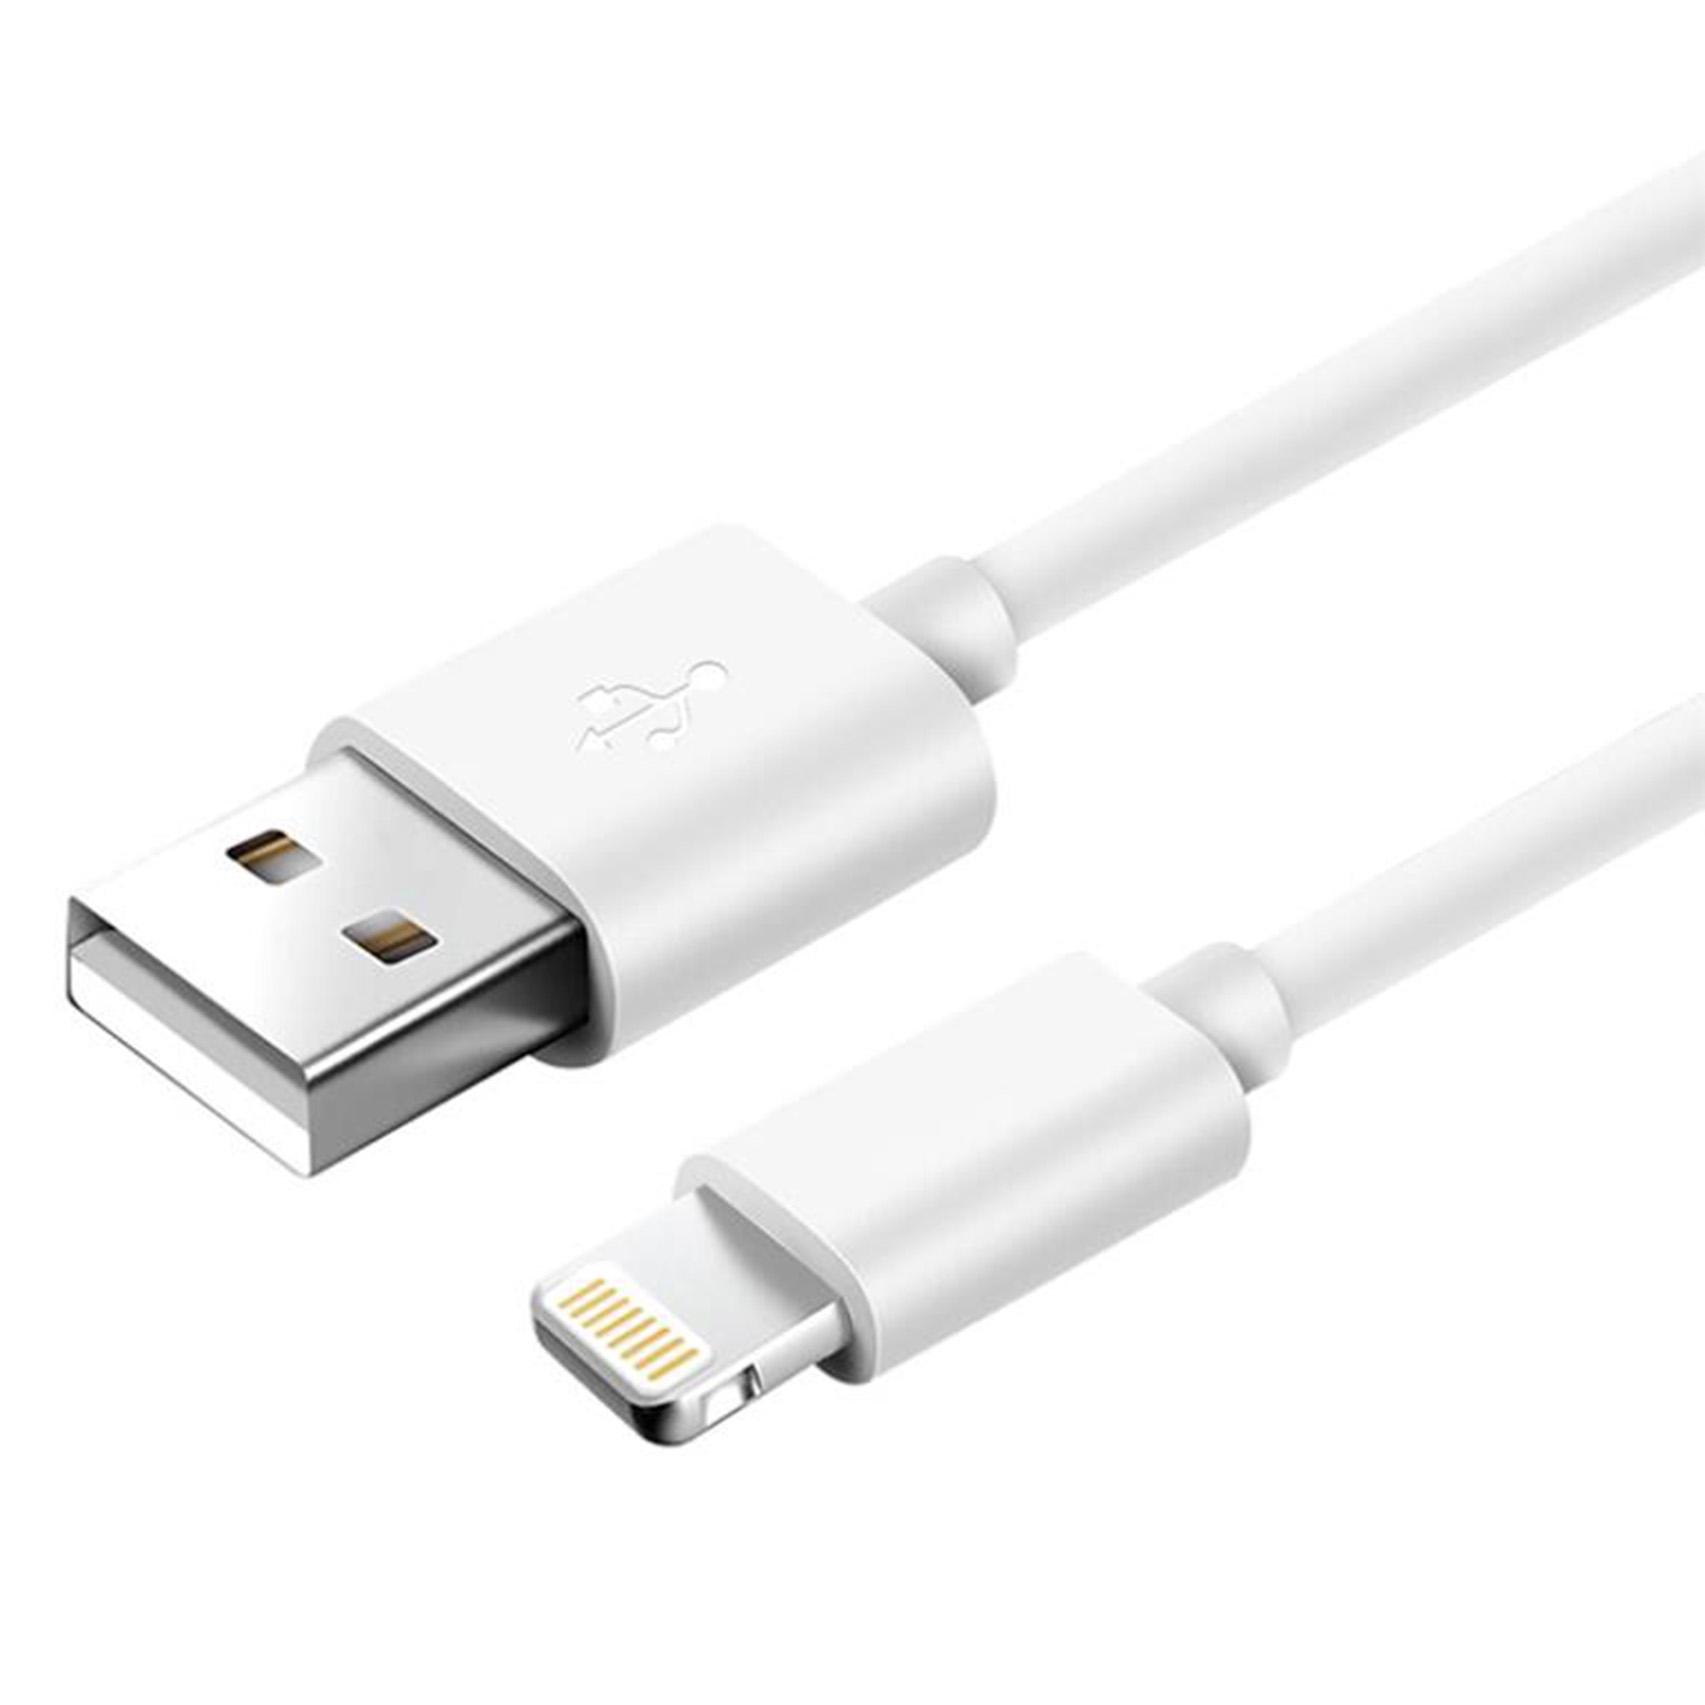 6x iPhone 7 Lightning auf USB Kabel 1m Ladekabel